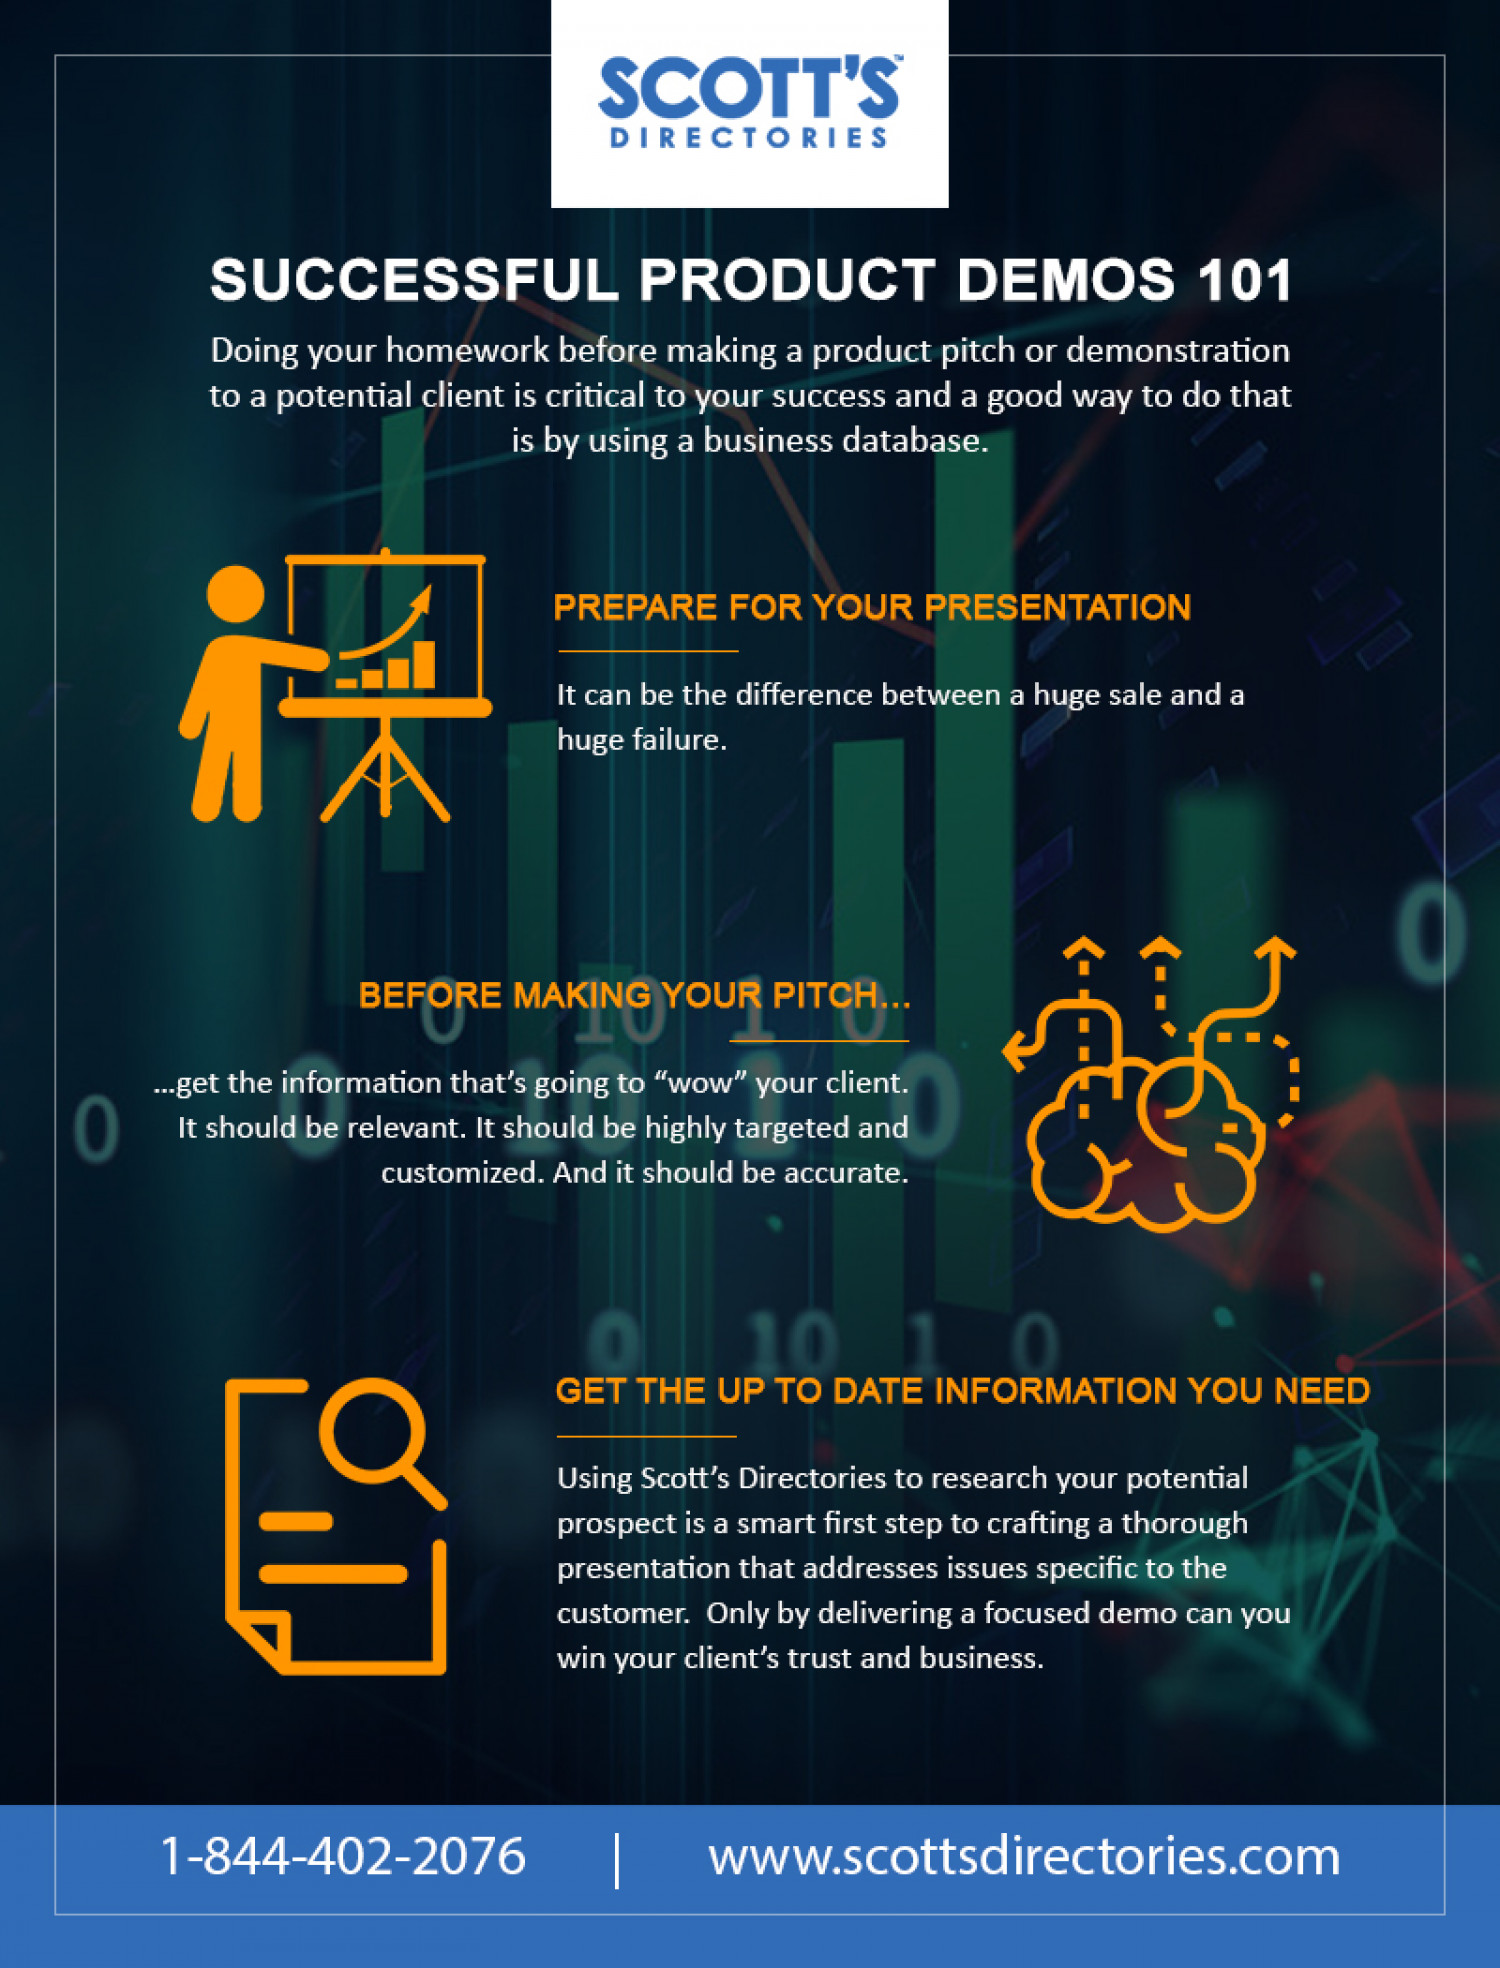 Successful Product Demos 101 - Scott's Directories Infographic